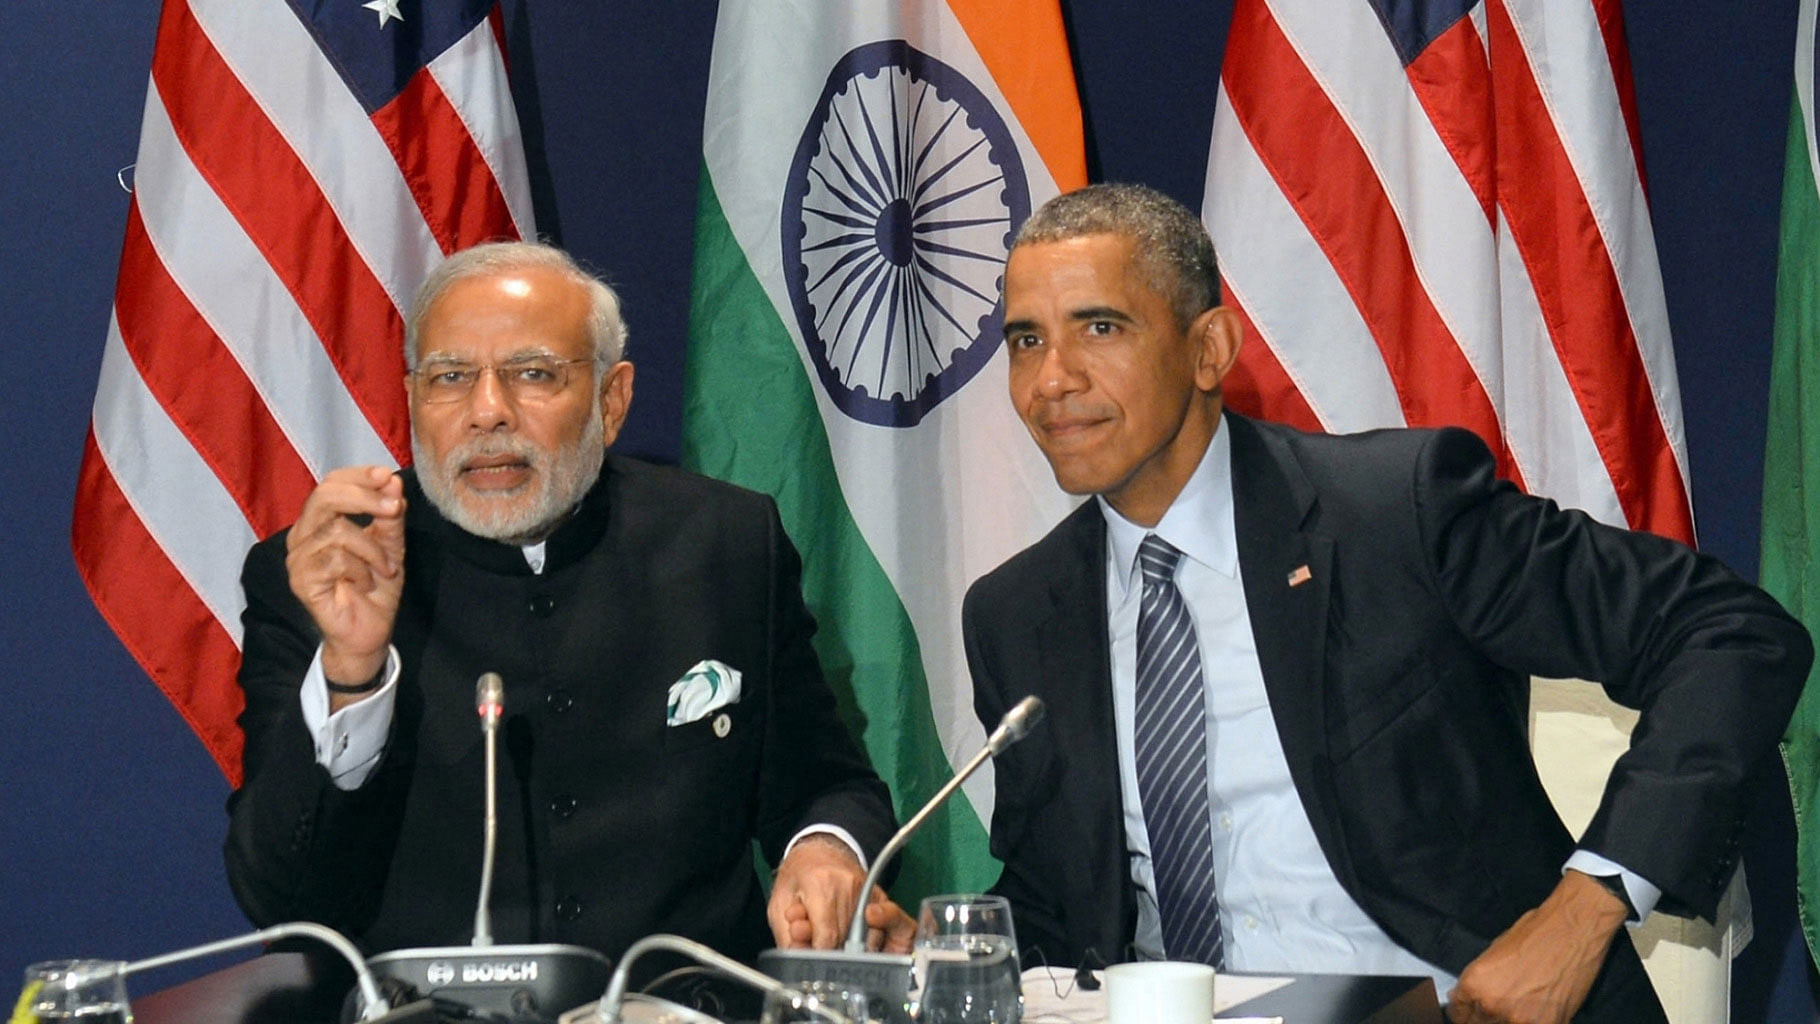 File photo of Prime Minister Narendra Modi and President Barack Obama. (Photo: IANS)